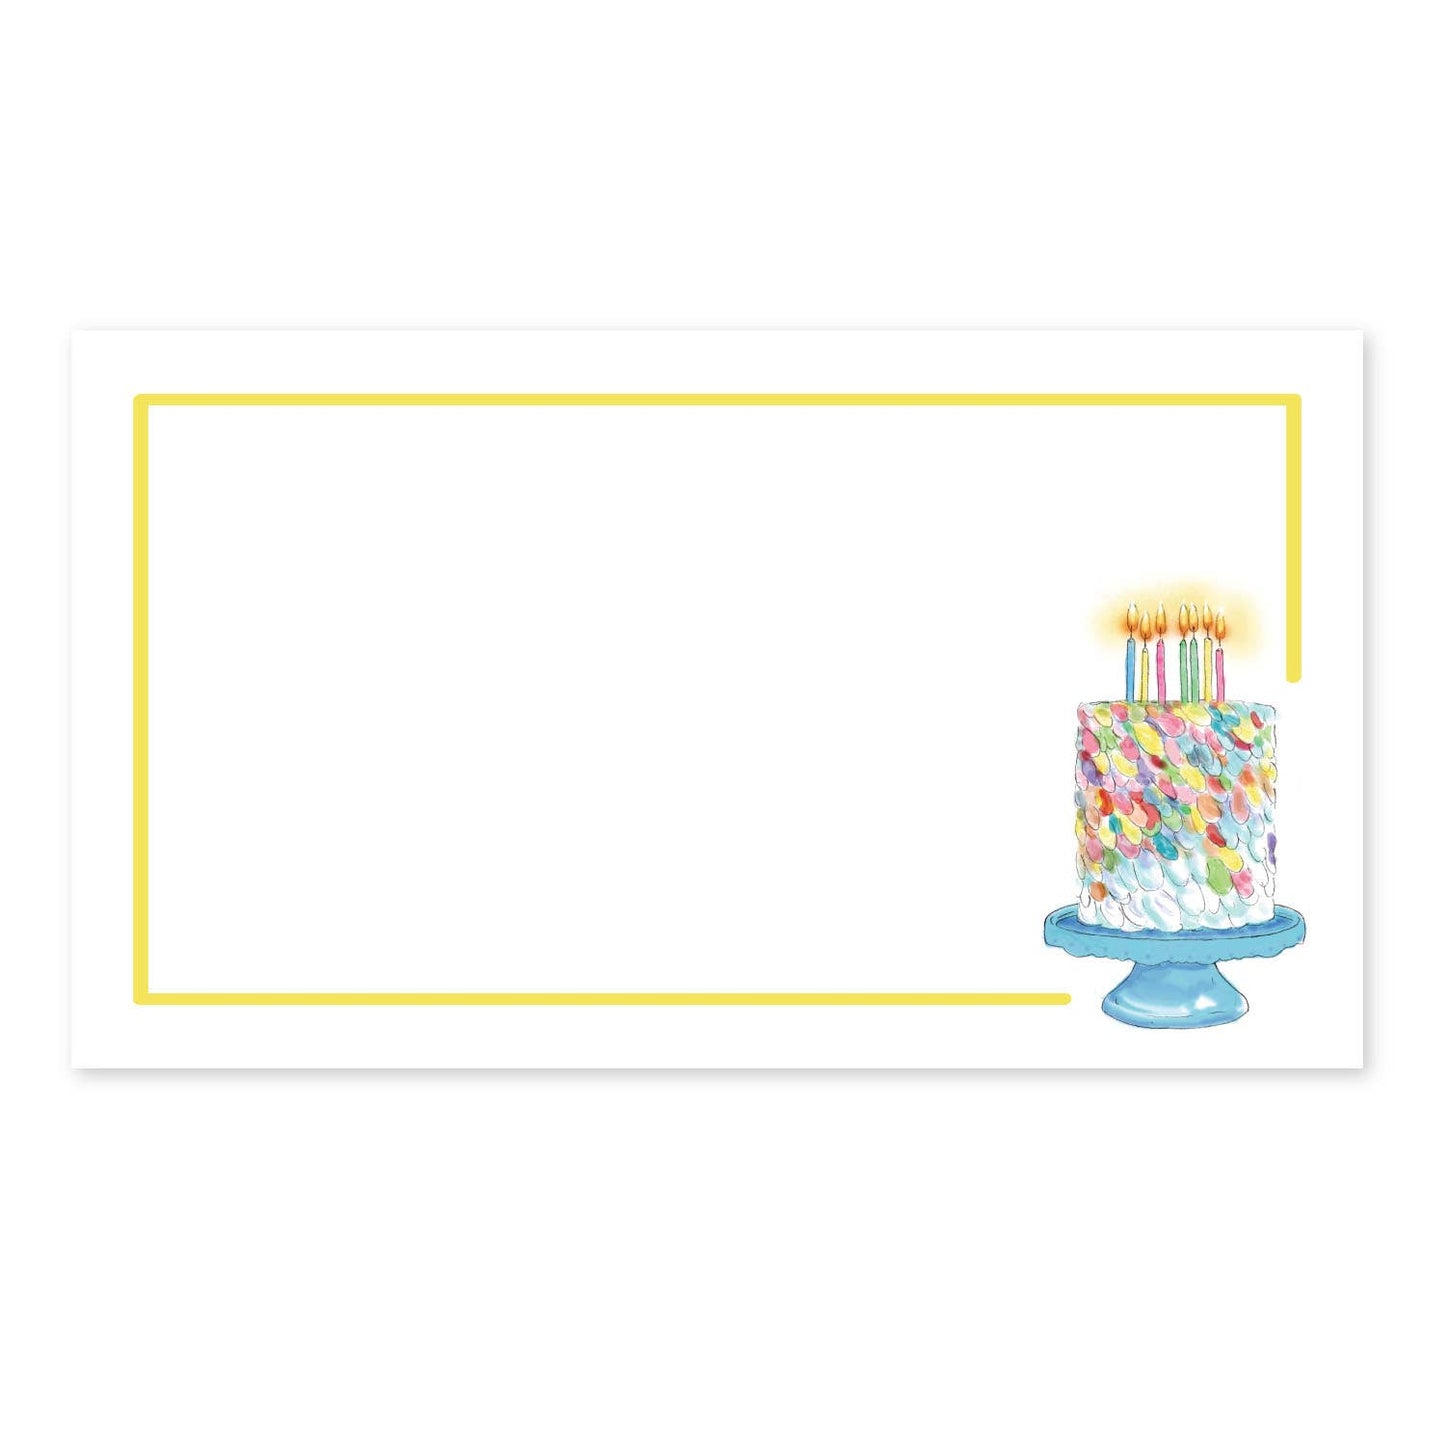 BIRTHDAY CAKE PLACE CARD